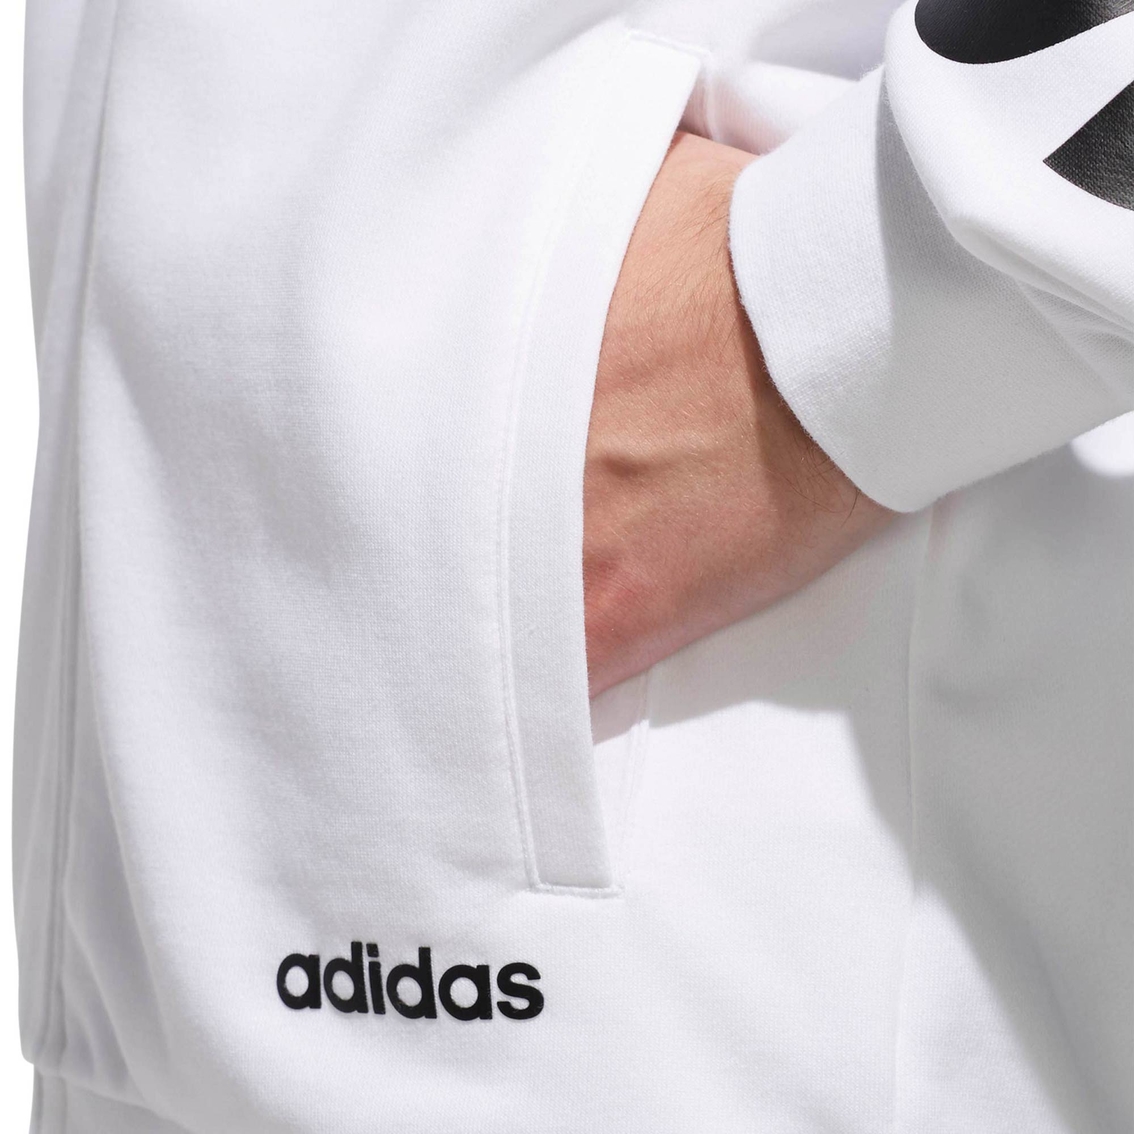 adidas E Branded Track Jacket - Image 5 of 5